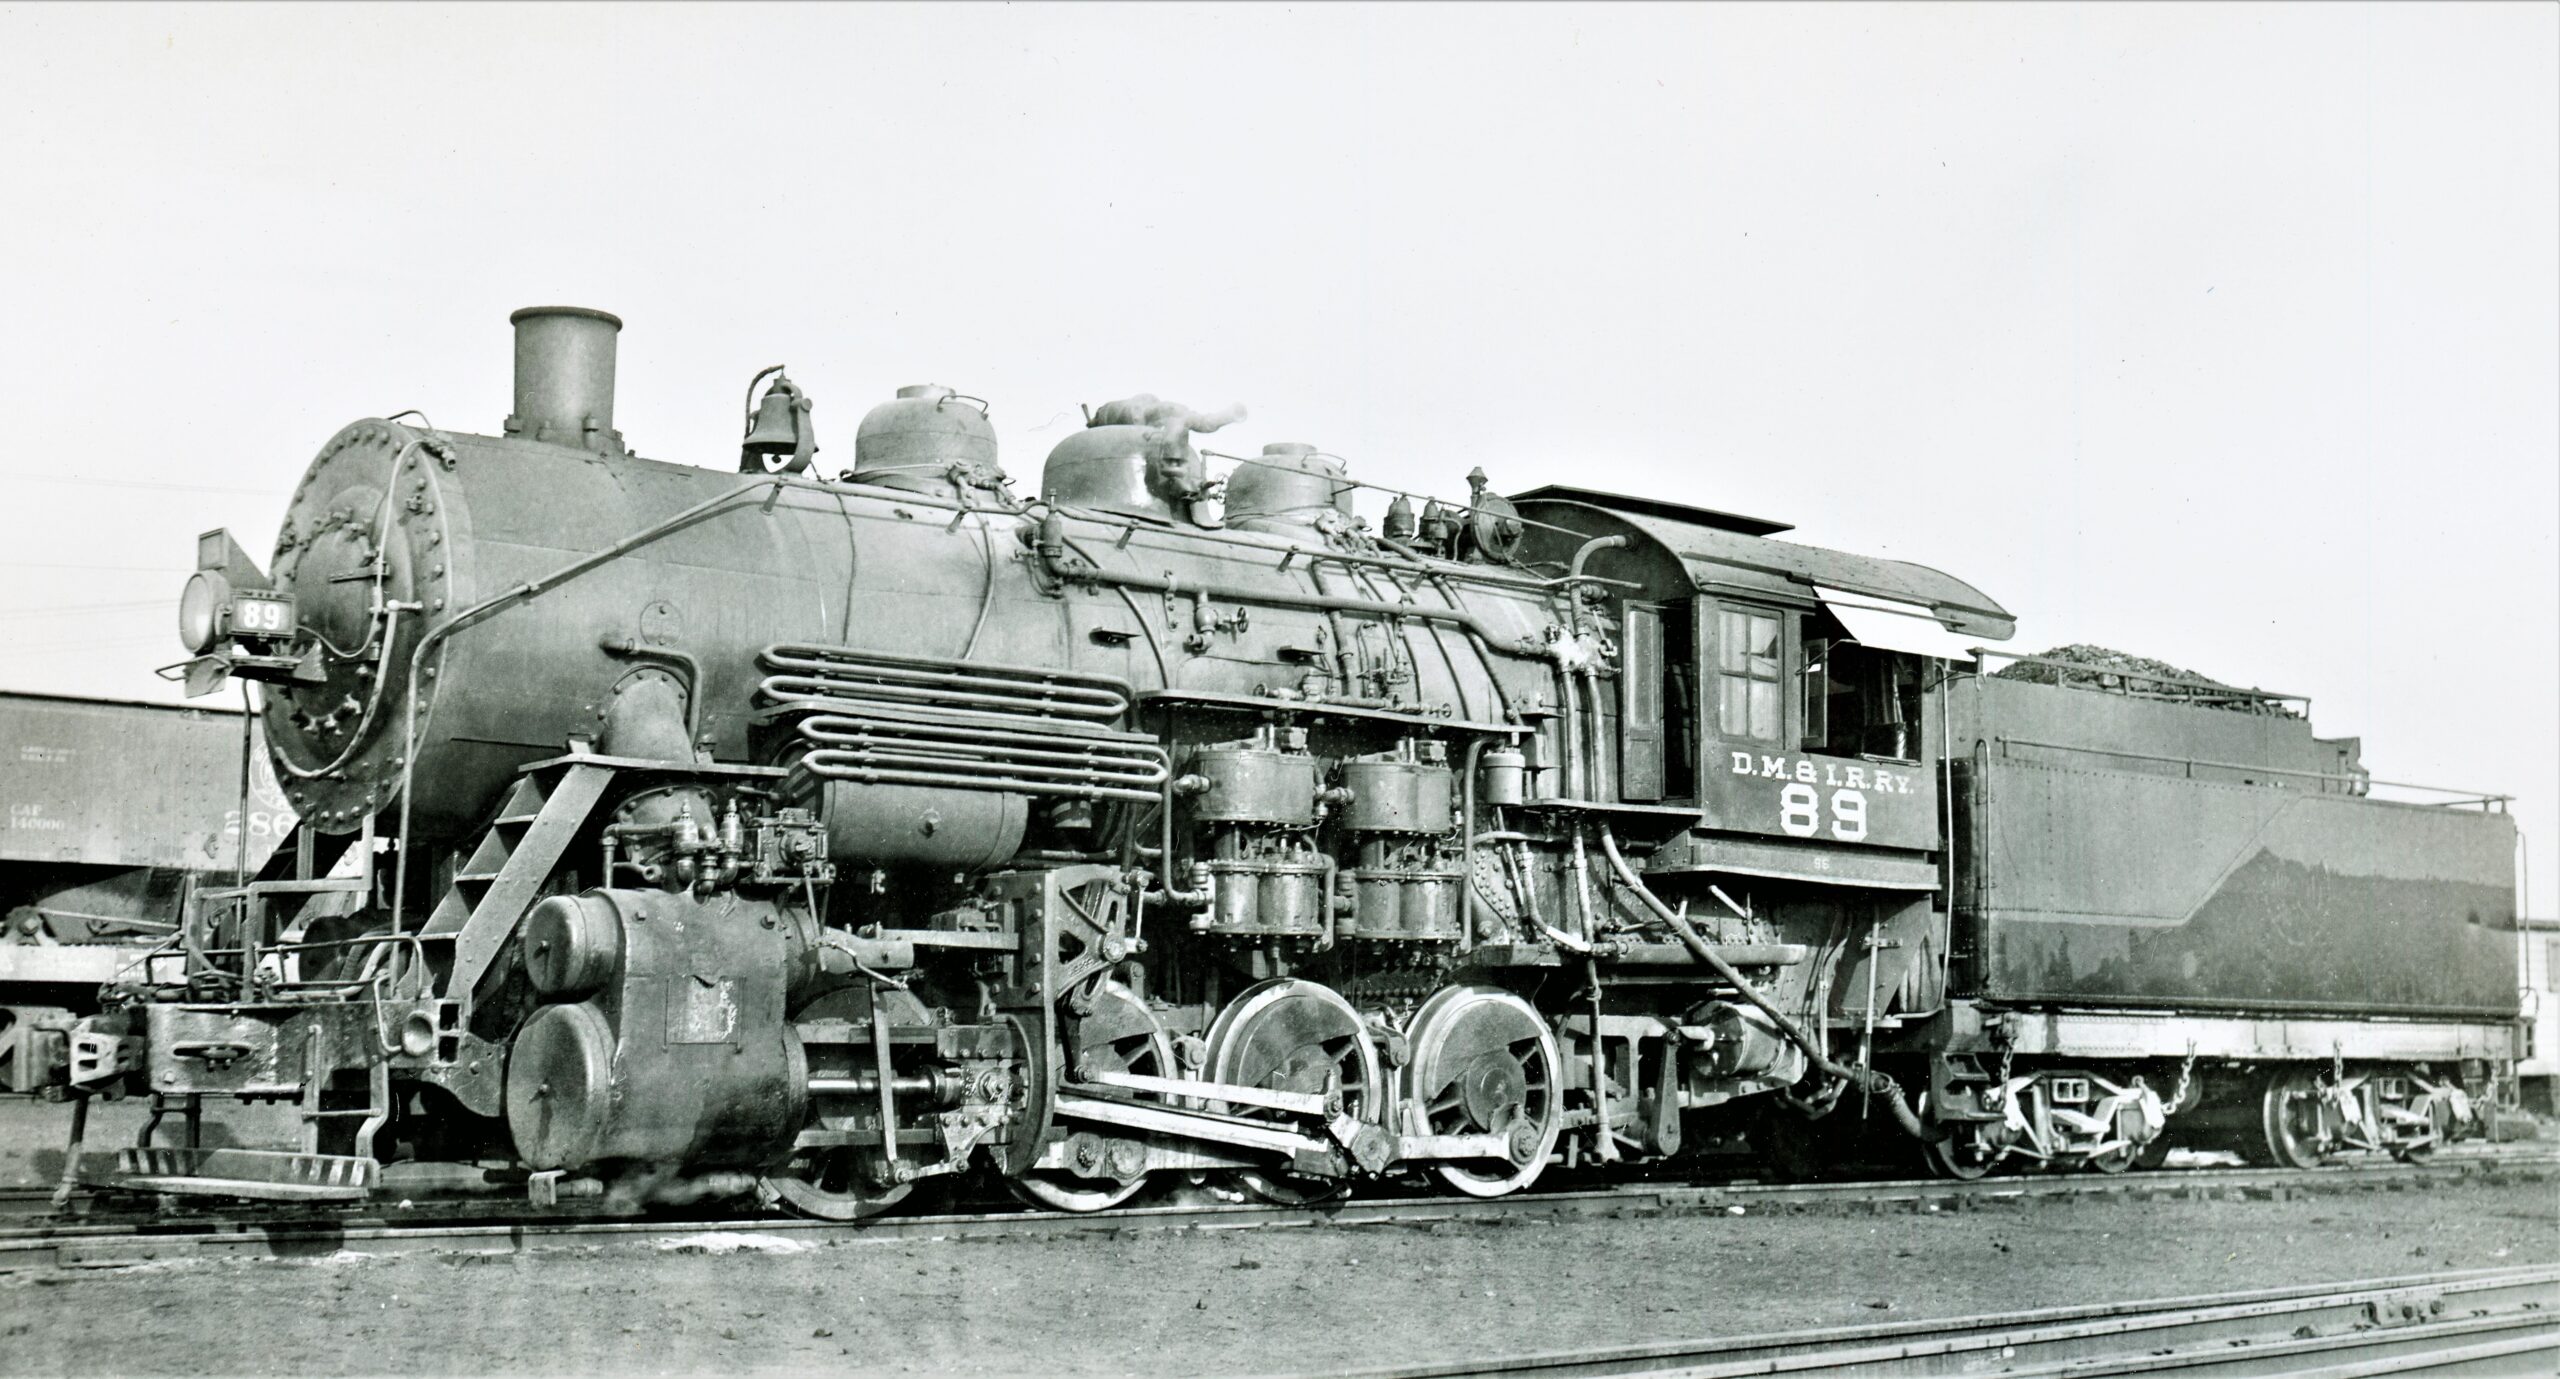 Duluth Missabe and Iron Range Railroad | Proctor, Minnesota | Class 0-8-0 #89 steam locomotive | September 12, 1952 | Robert P. Morris photograph